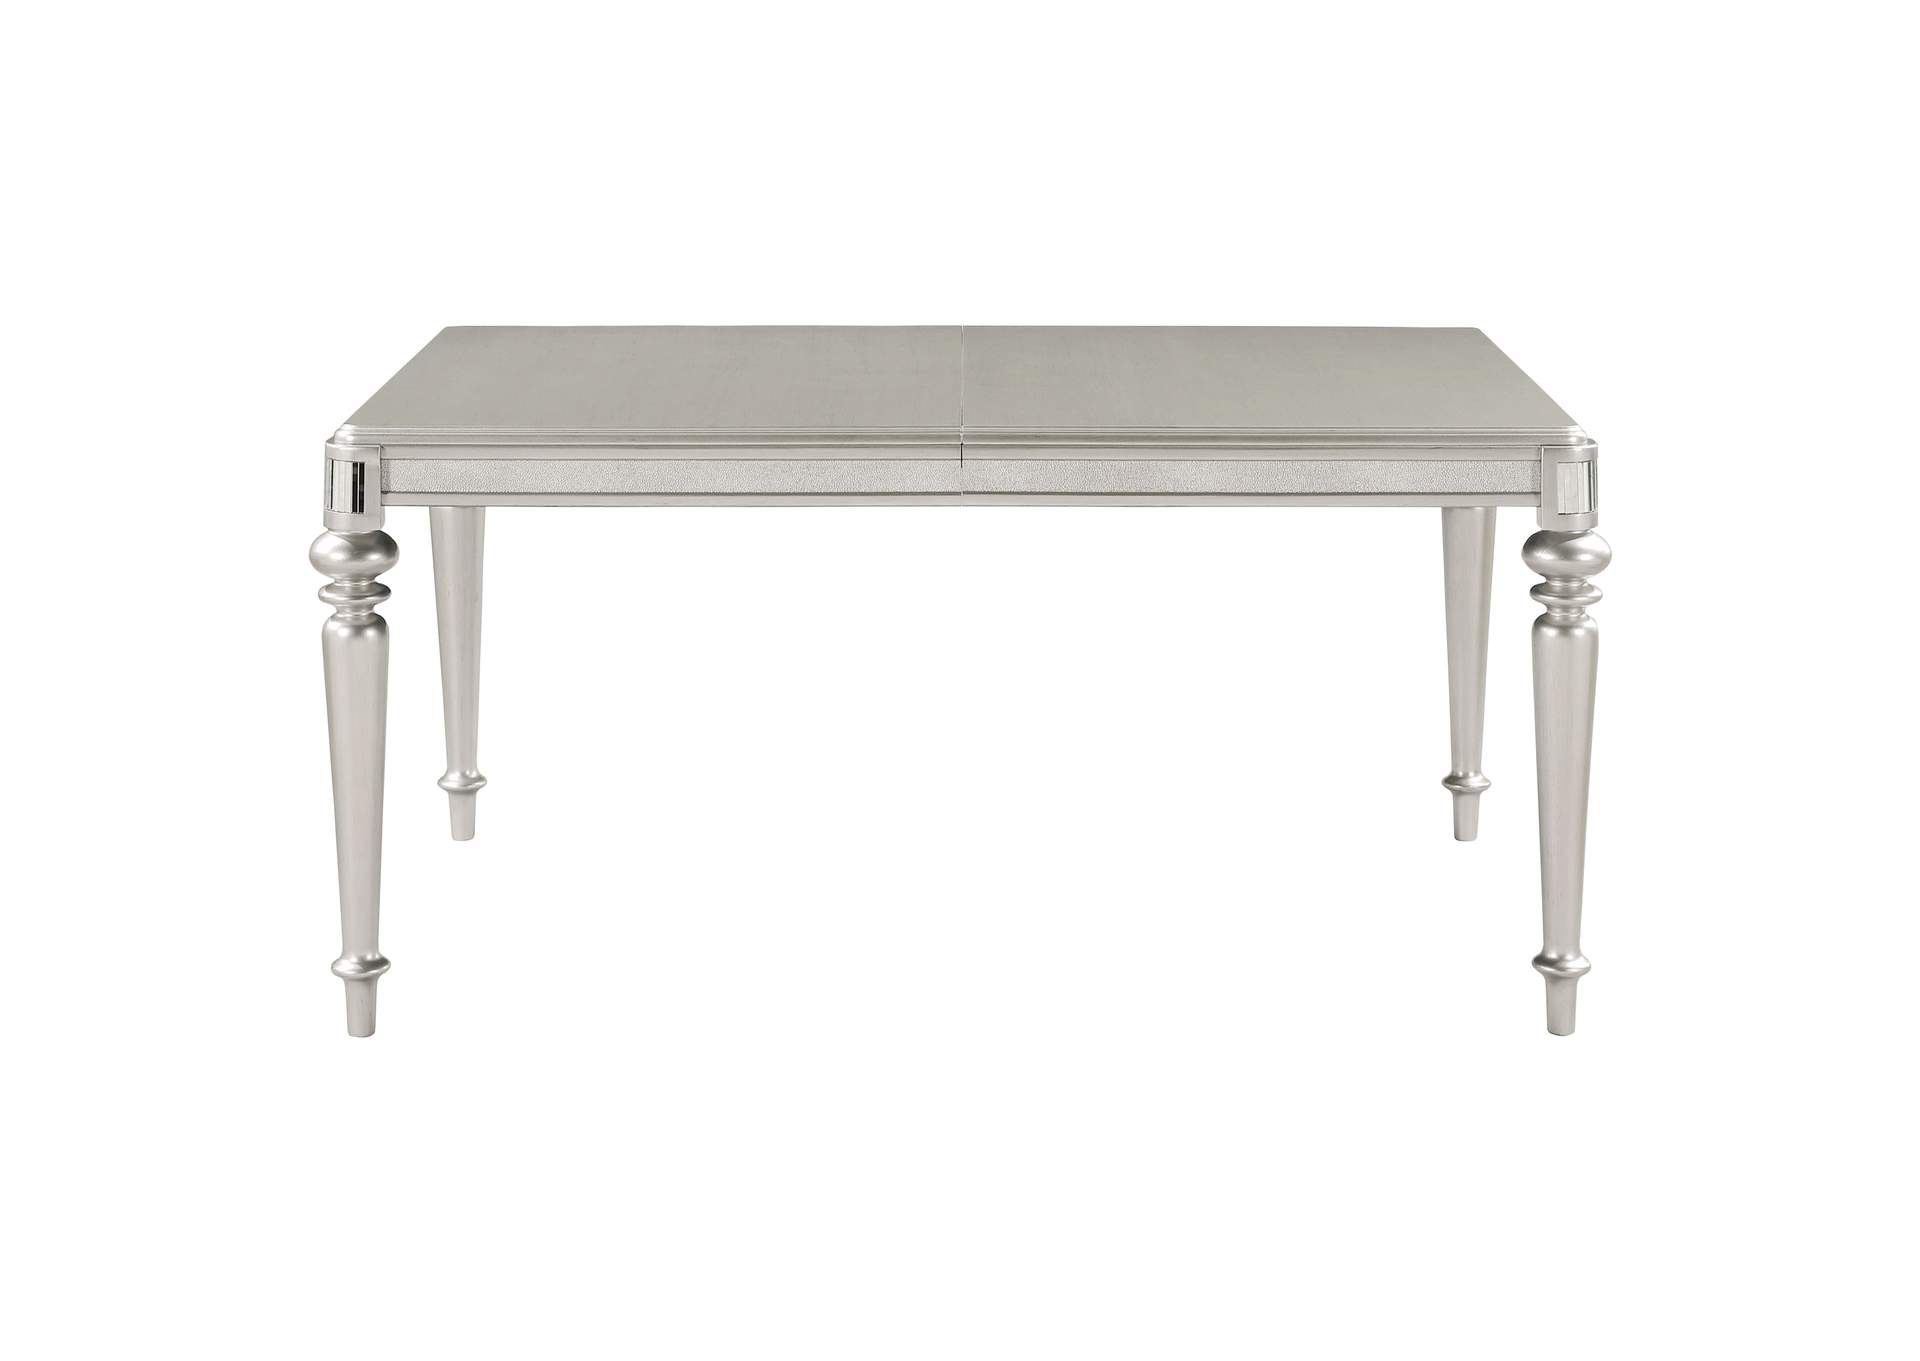 Danette Rectangular Dining Table with Leaf Metallic Platinum,Coaster Furniture